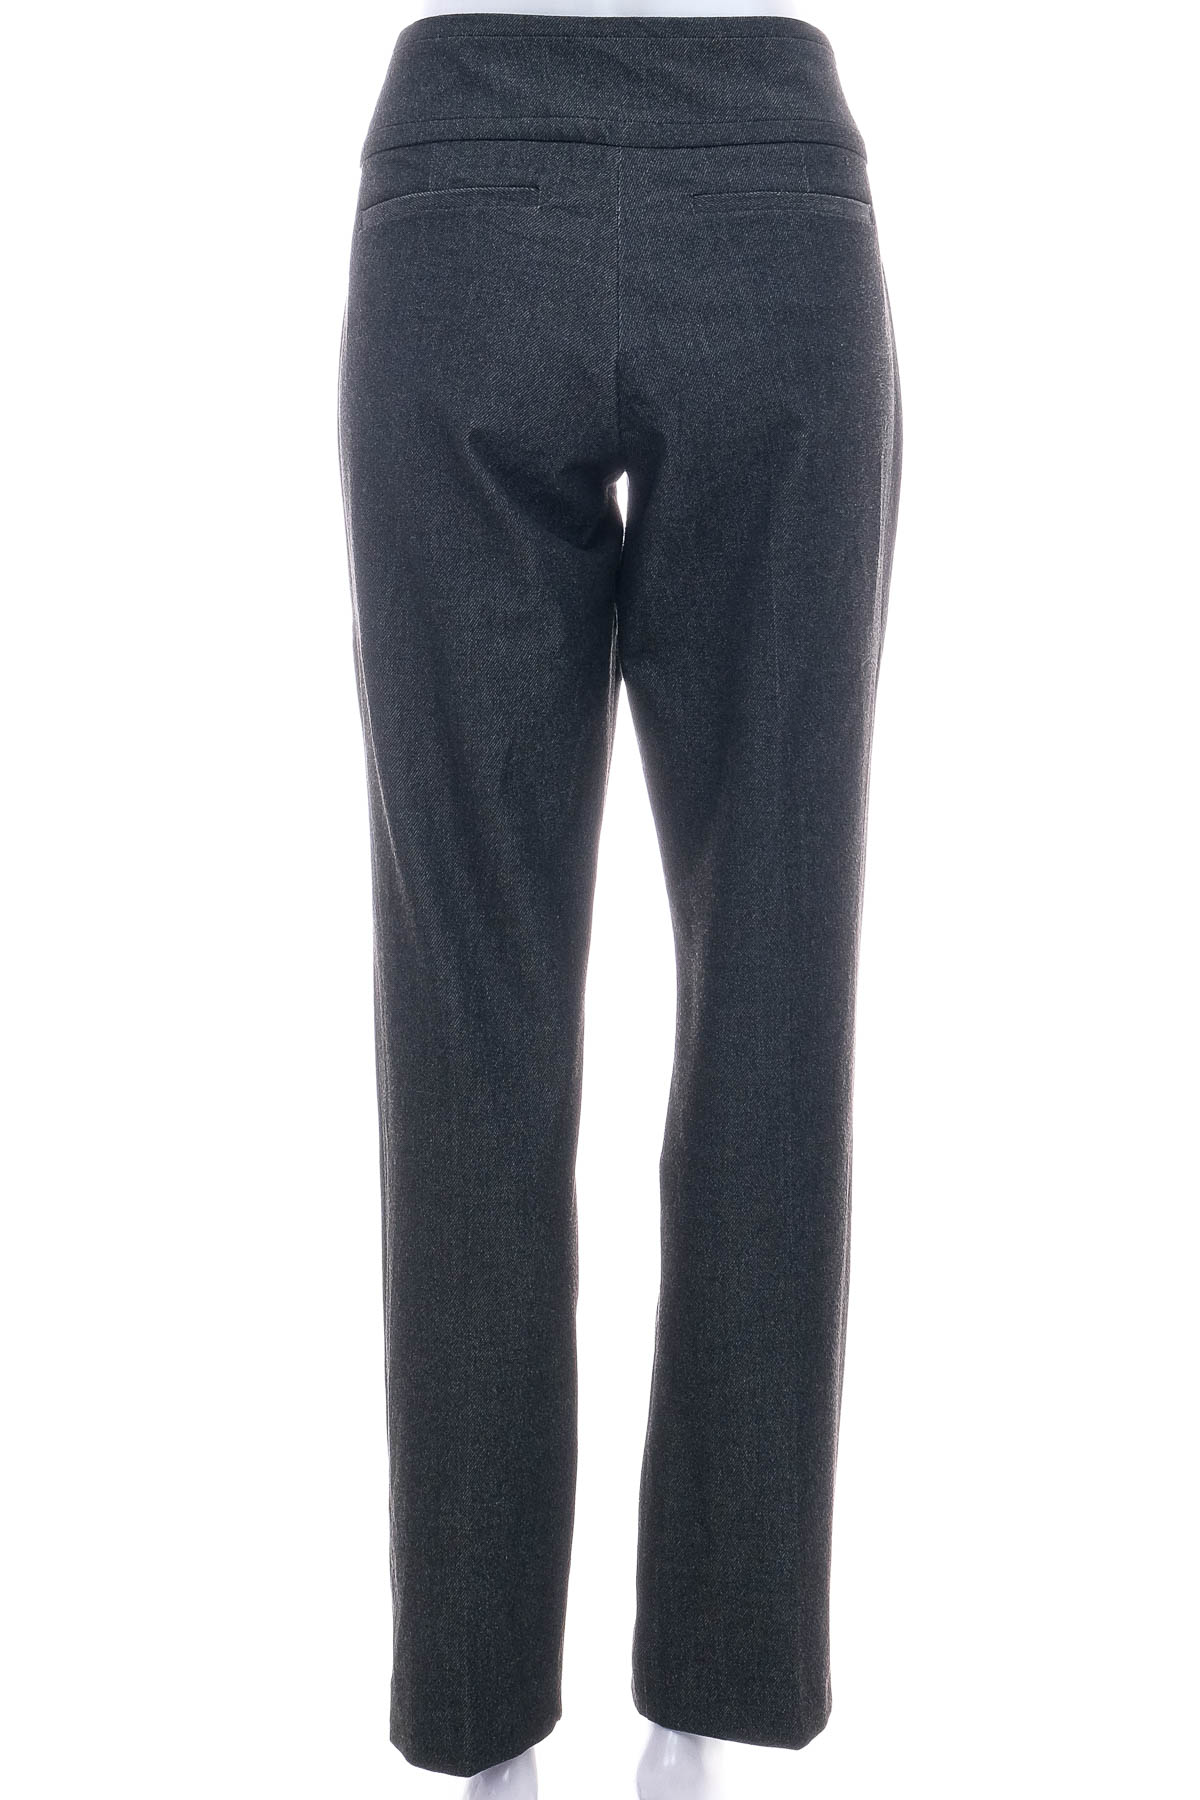 Women's trousers - New York & Company - 1